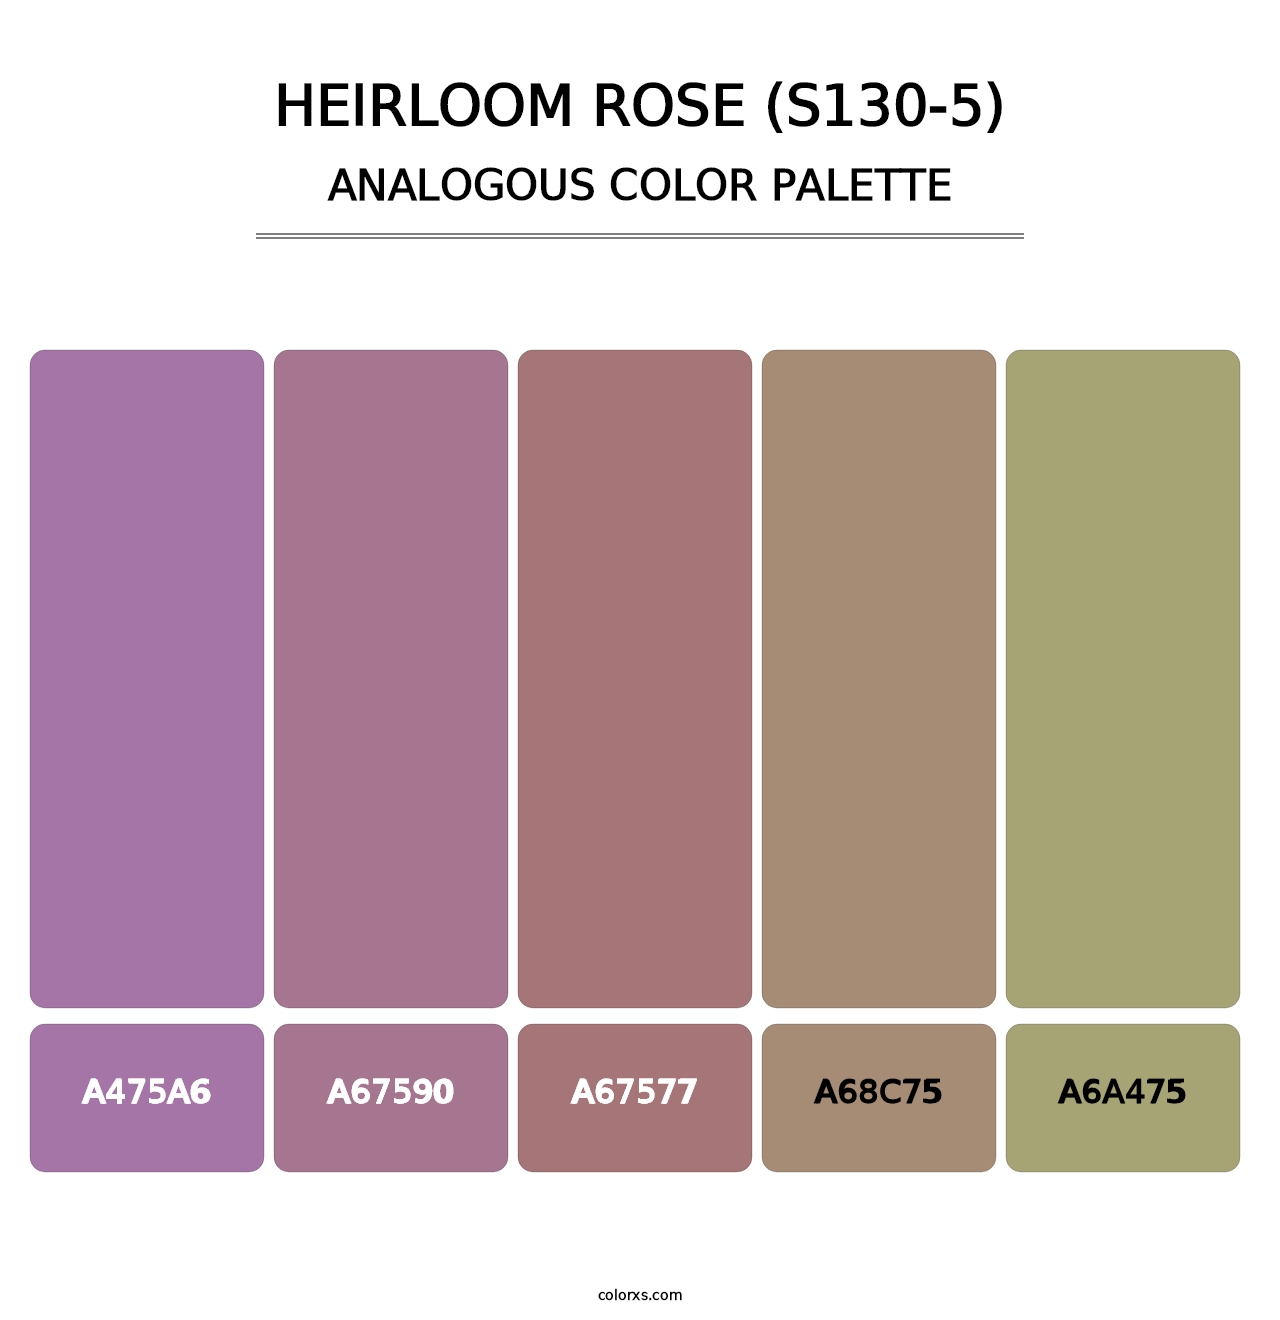 Heirloom Rose (S130-5) - Analogous Color Palette